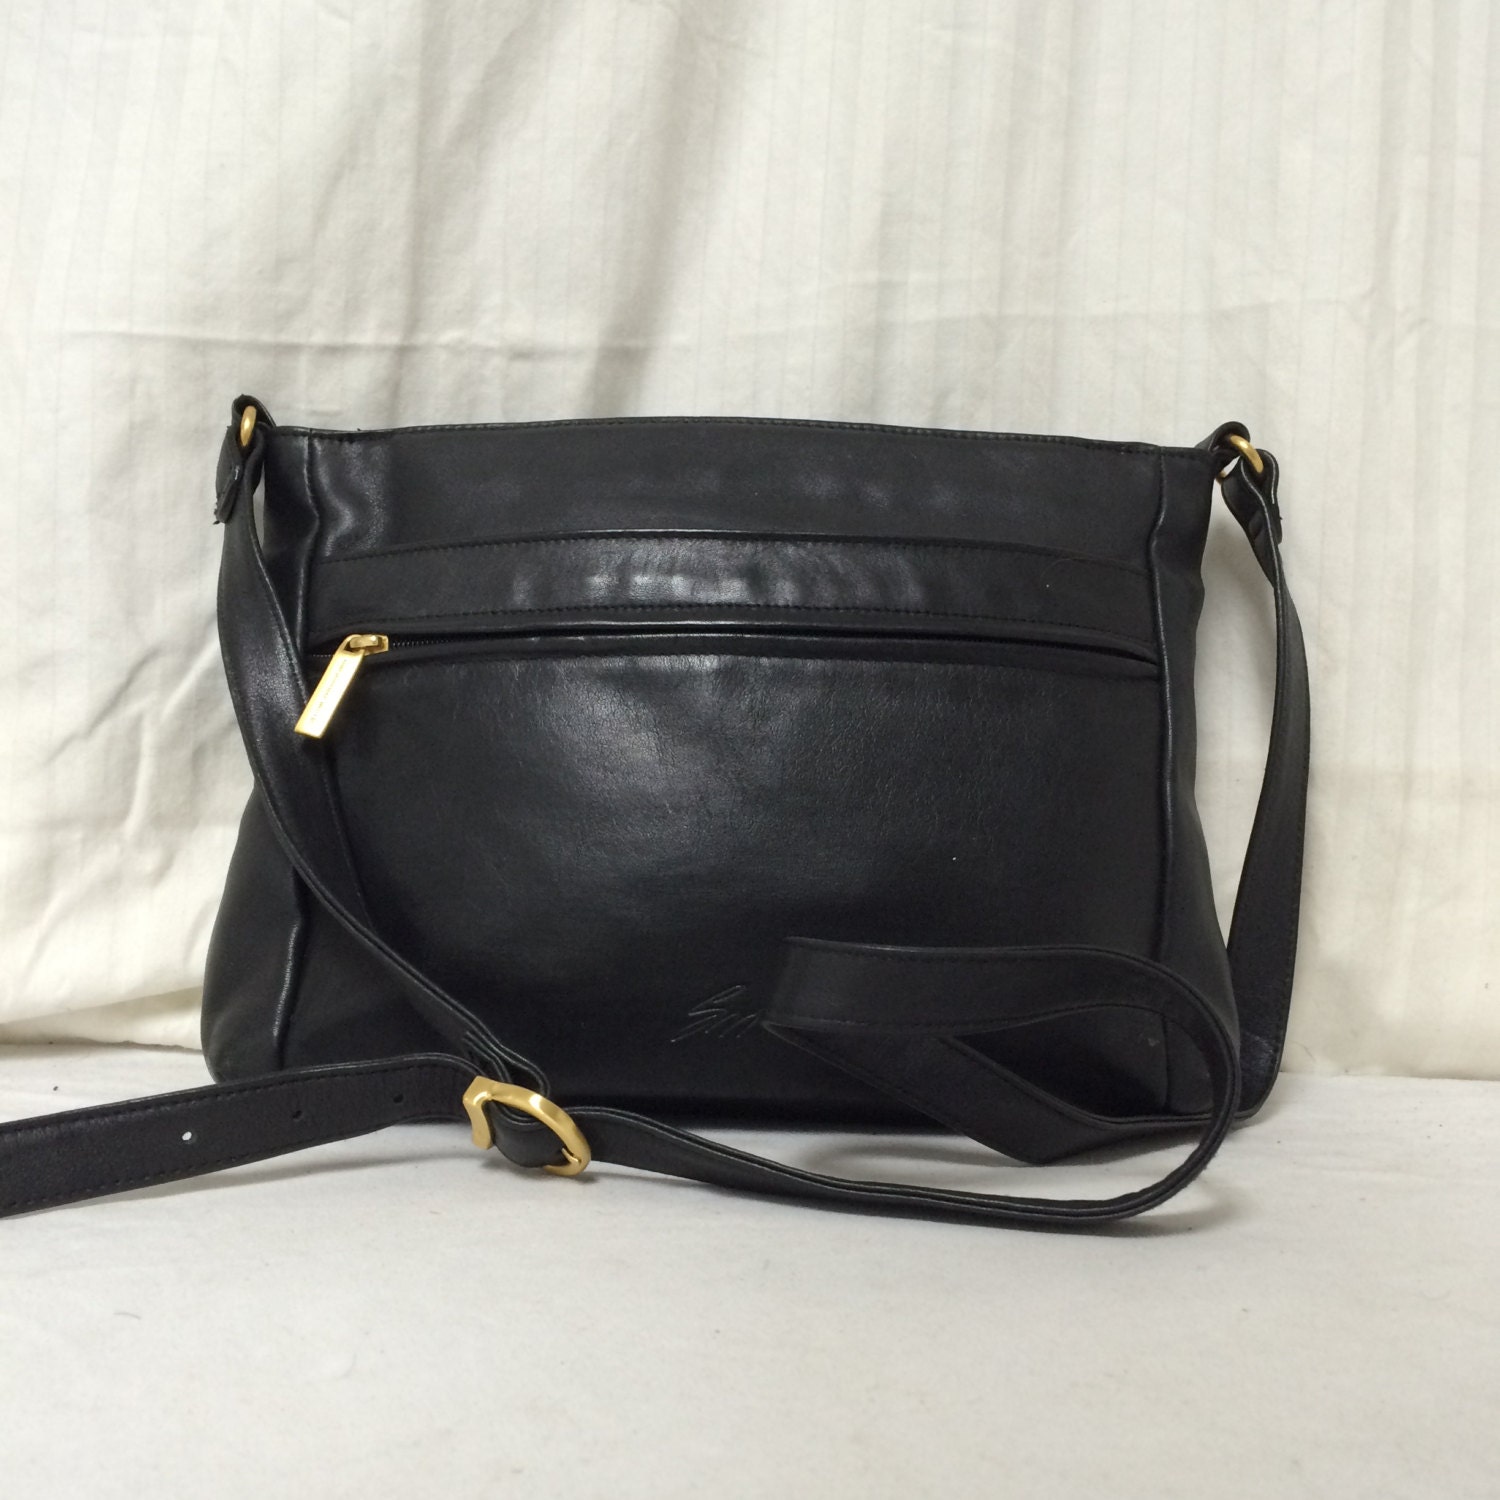 Stone Mountainleather pursebag black leather purse